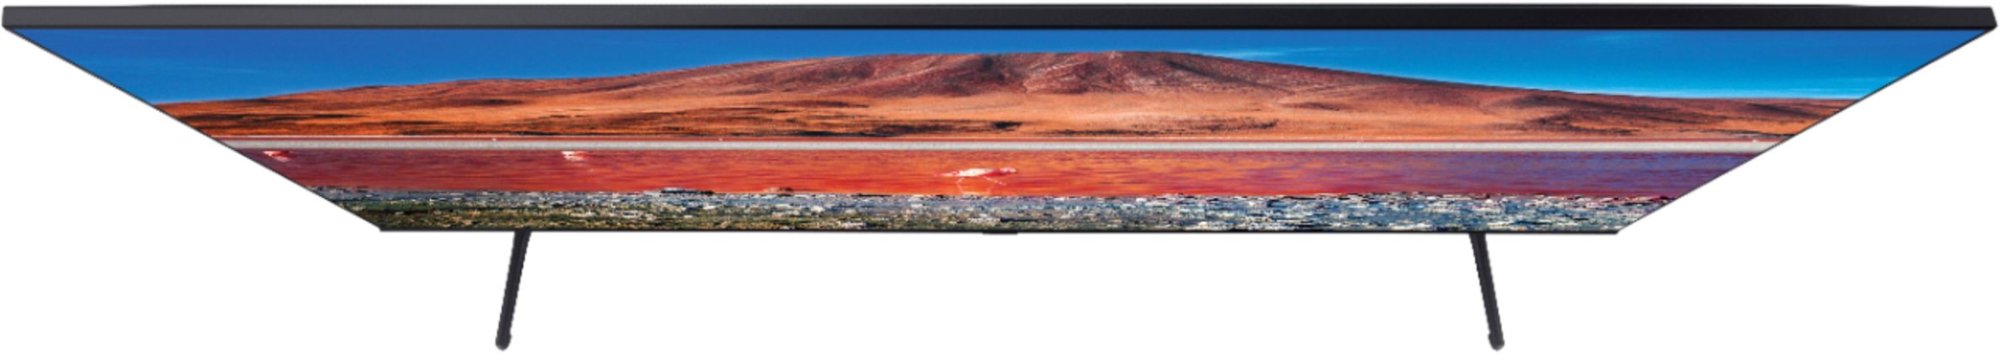 Samsung 65" Class 4K Crystal UHD Smart TV with HDR (UN65ATU7000B)